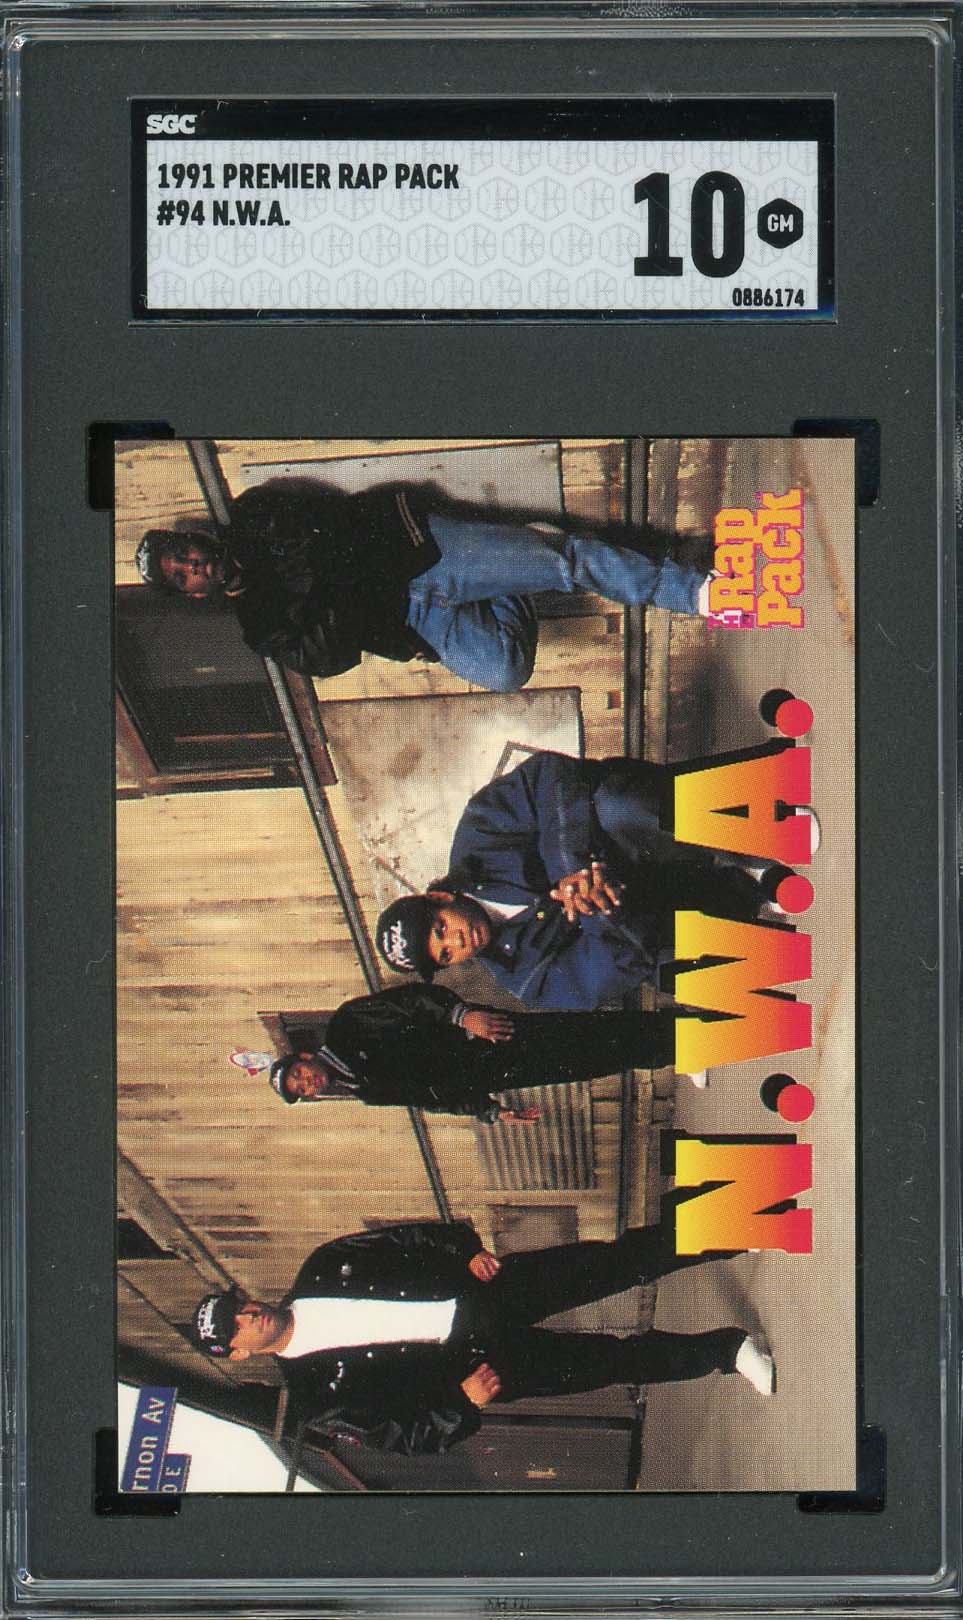 NWA 1991 Premier Rap Pack Card #94 Graded SGC 10-Powers Sports Memorabilia